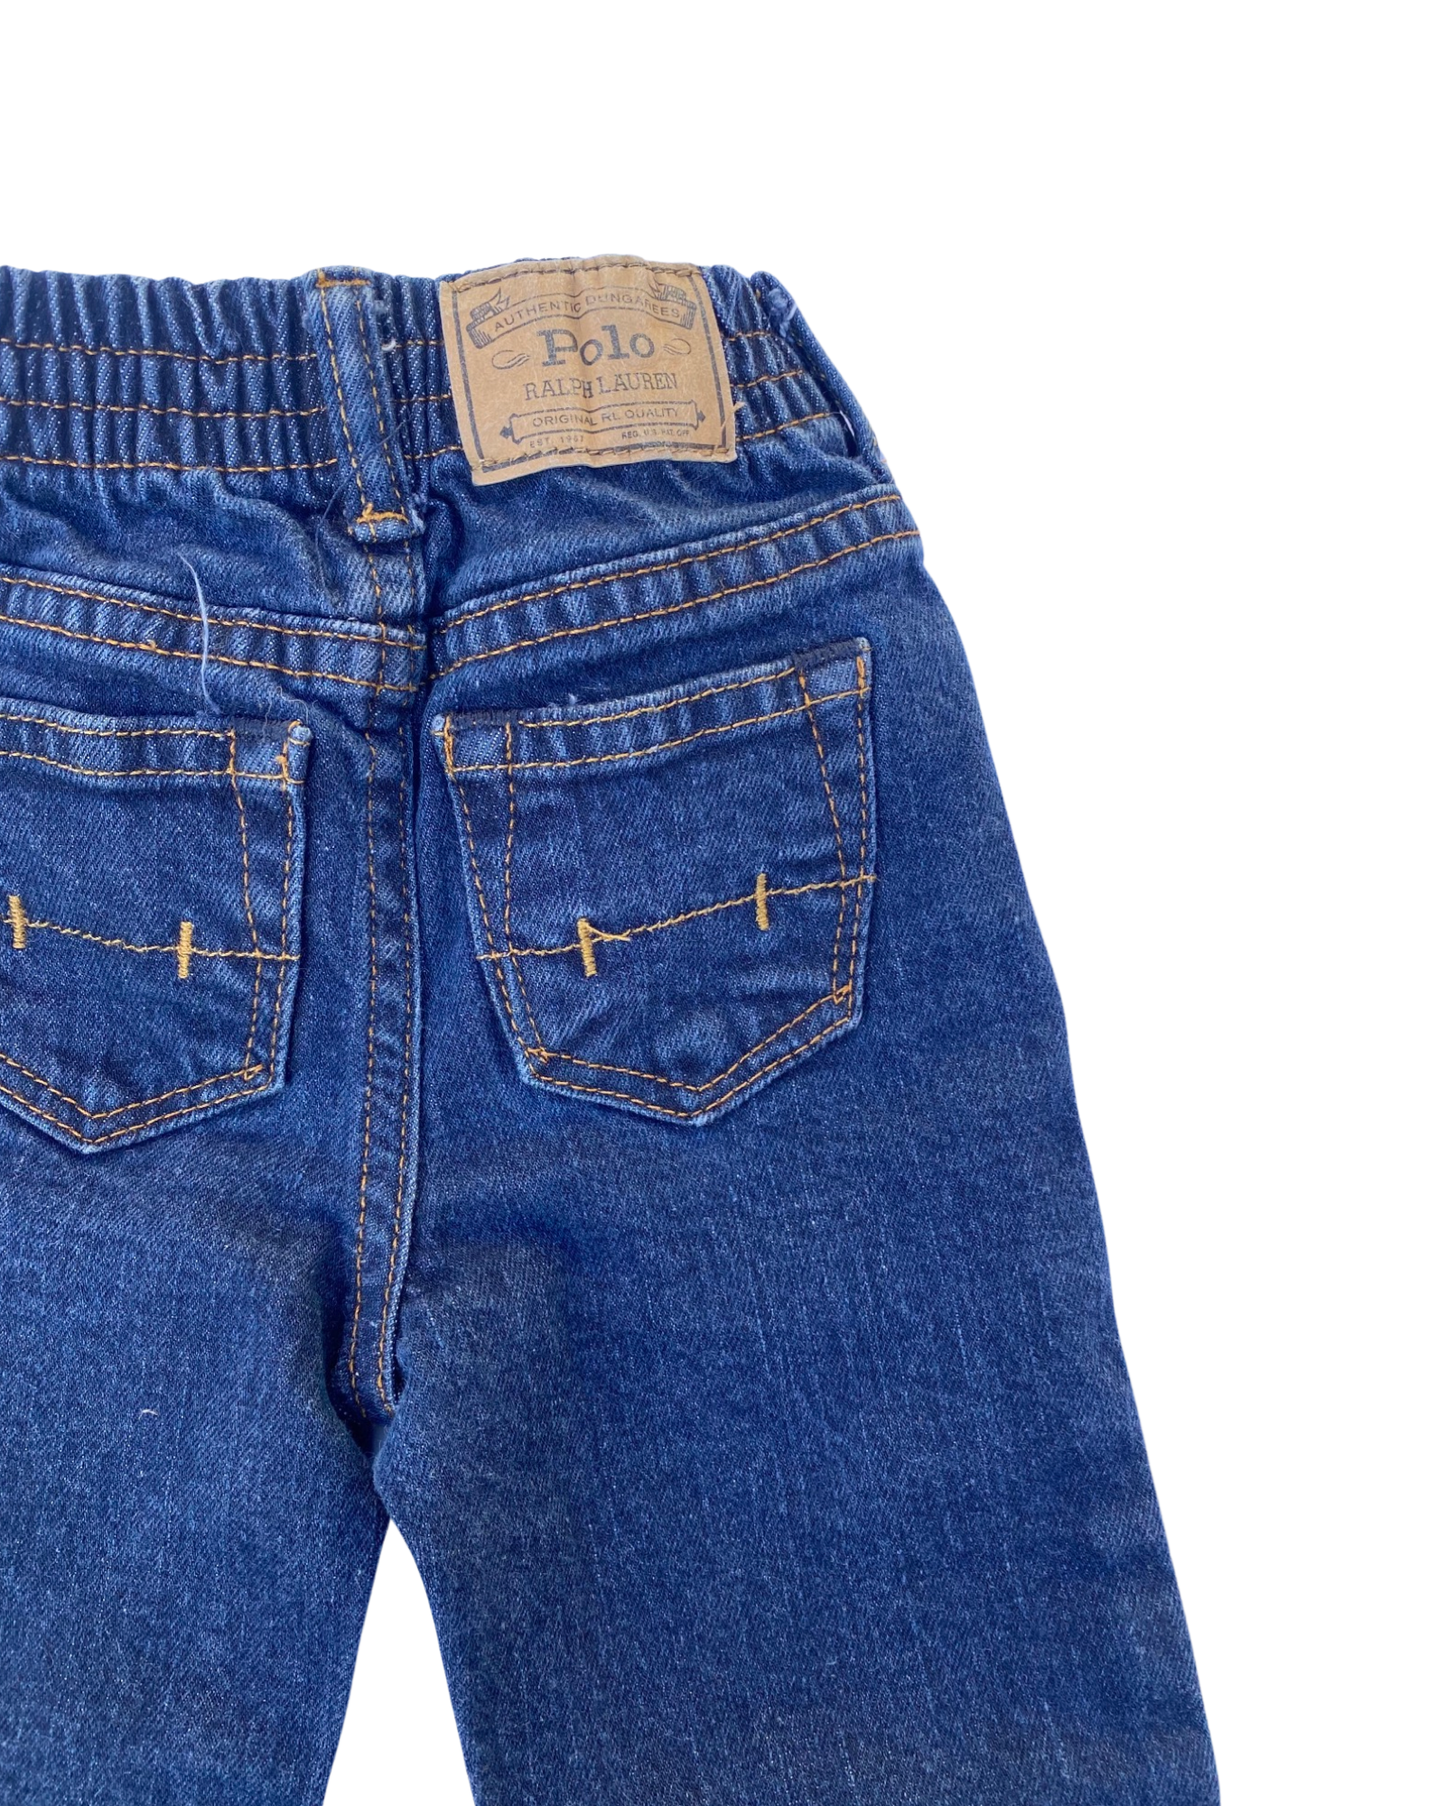 Polo Ralph Lauren mid wash jeans (size 12-18mths)